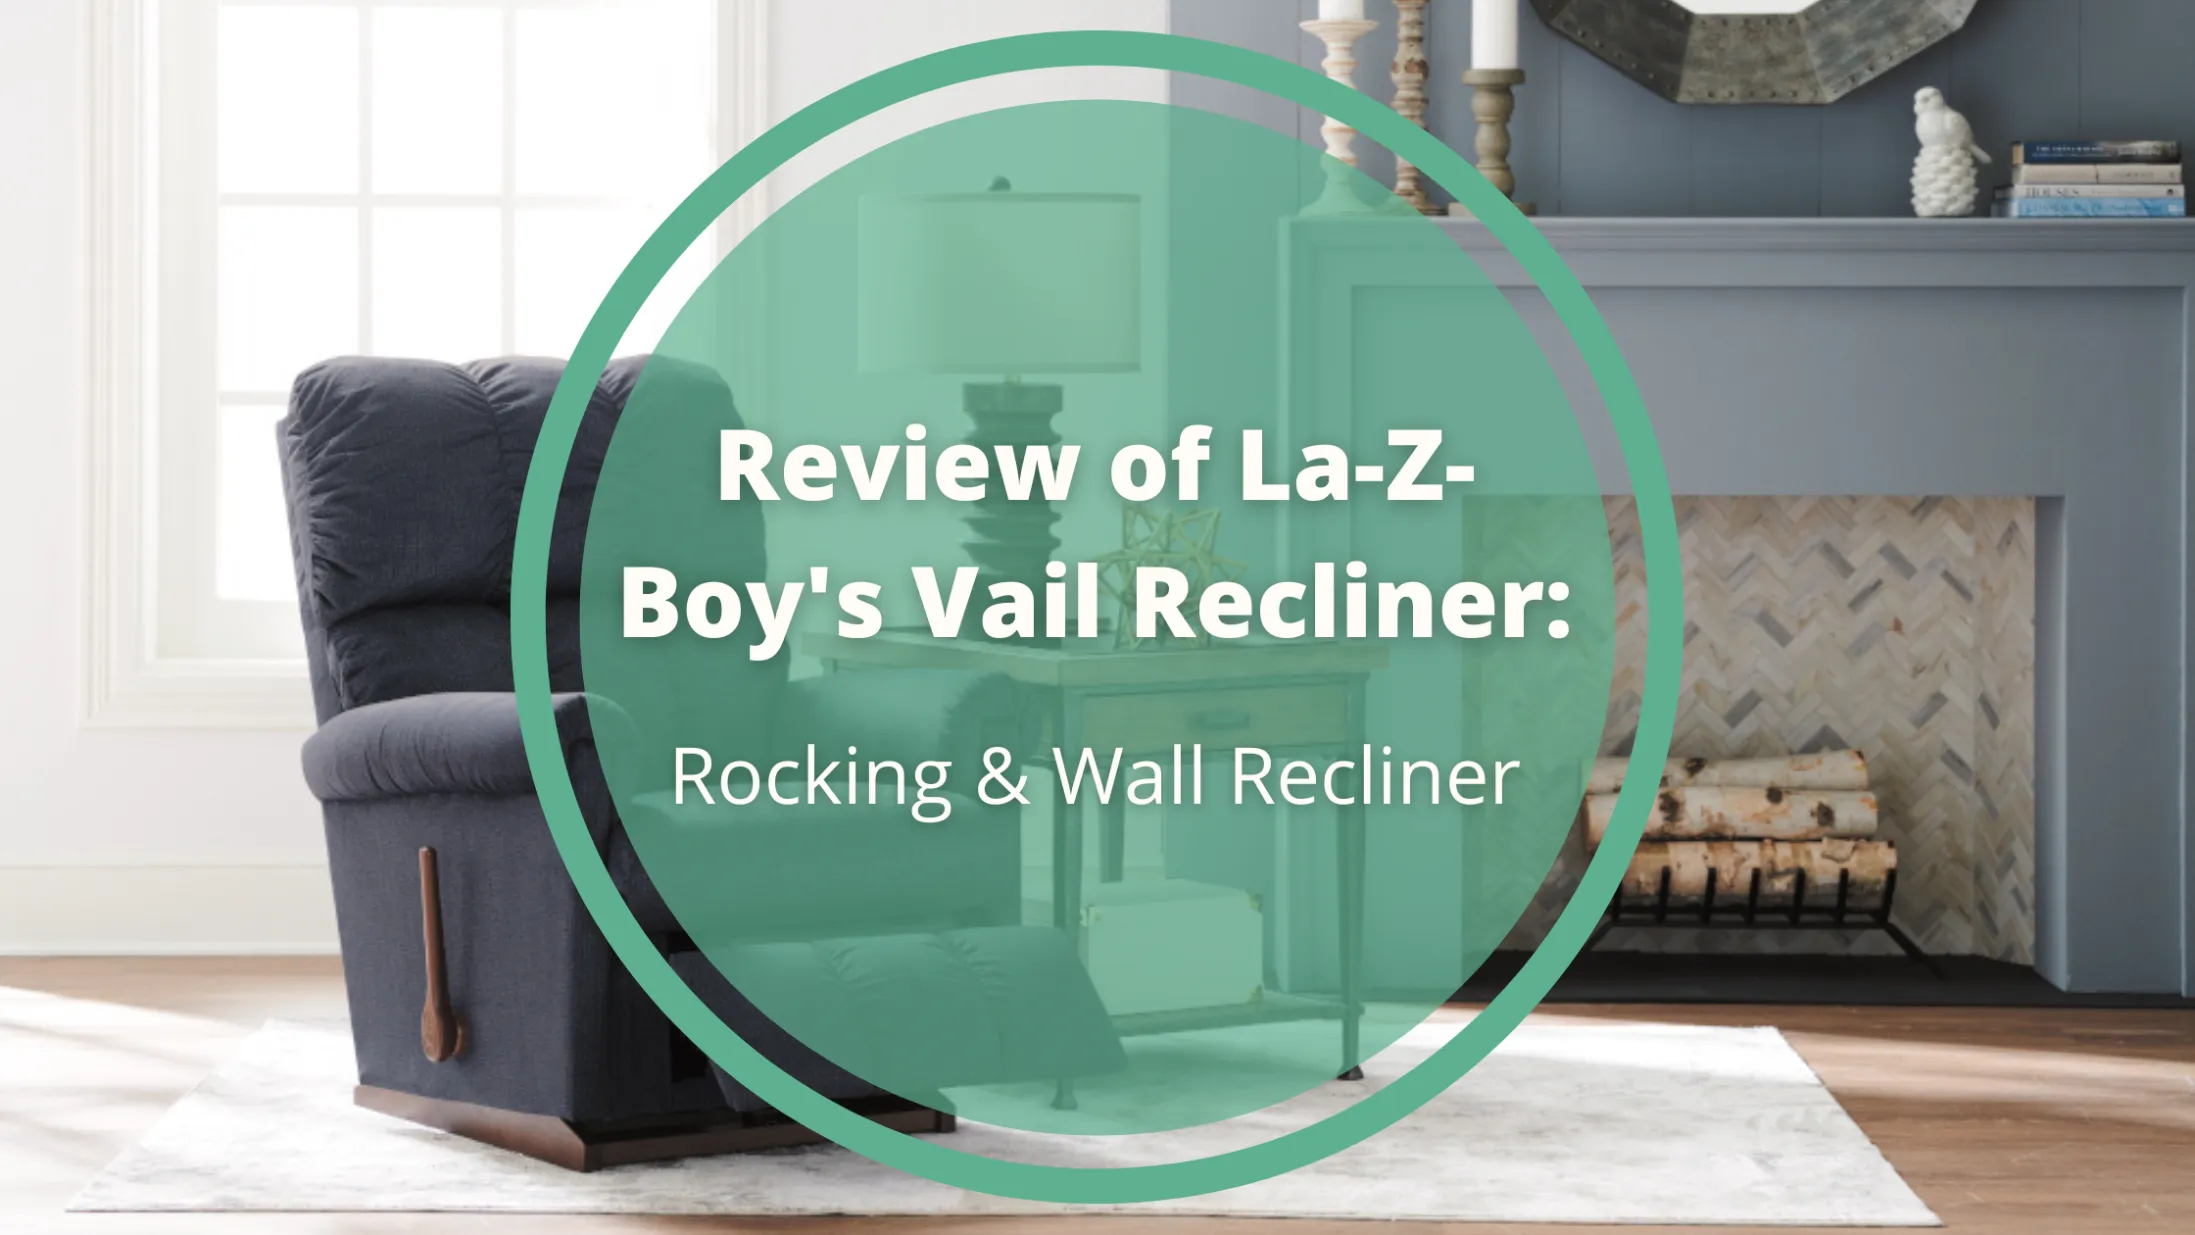 Review of La-Z-Boy’s Vail Recliner: Rocking & Wall Recliner